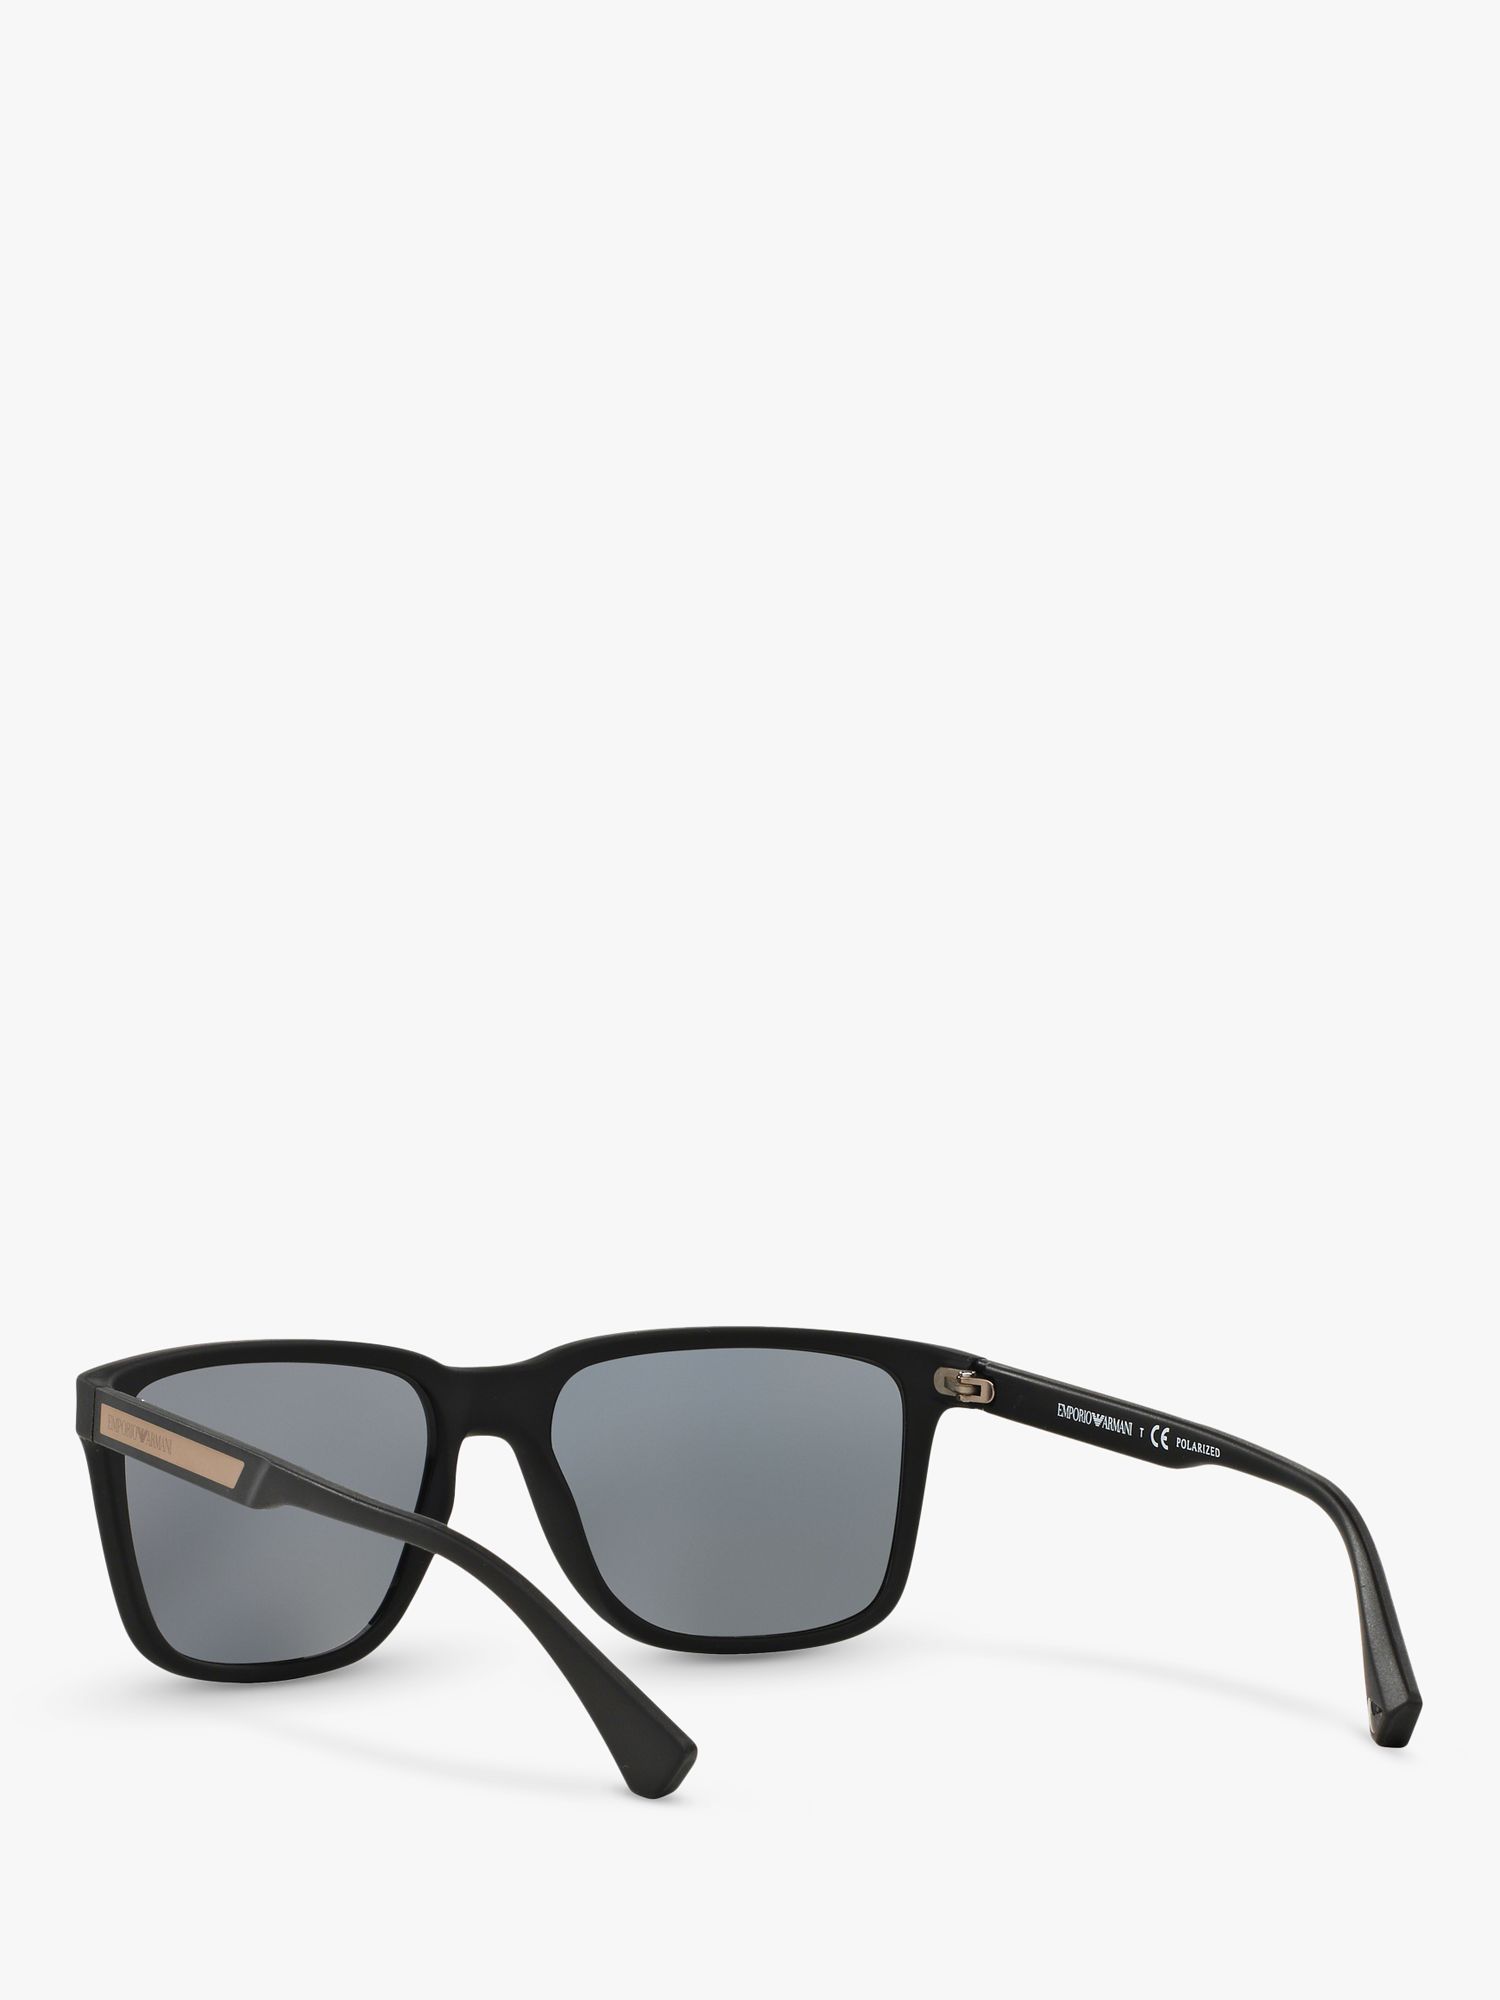 Emporio Armani EA4047 Men's Square Polarised Sunglasses, Rubber Black/Grey  at John Lewis u0026 Partners